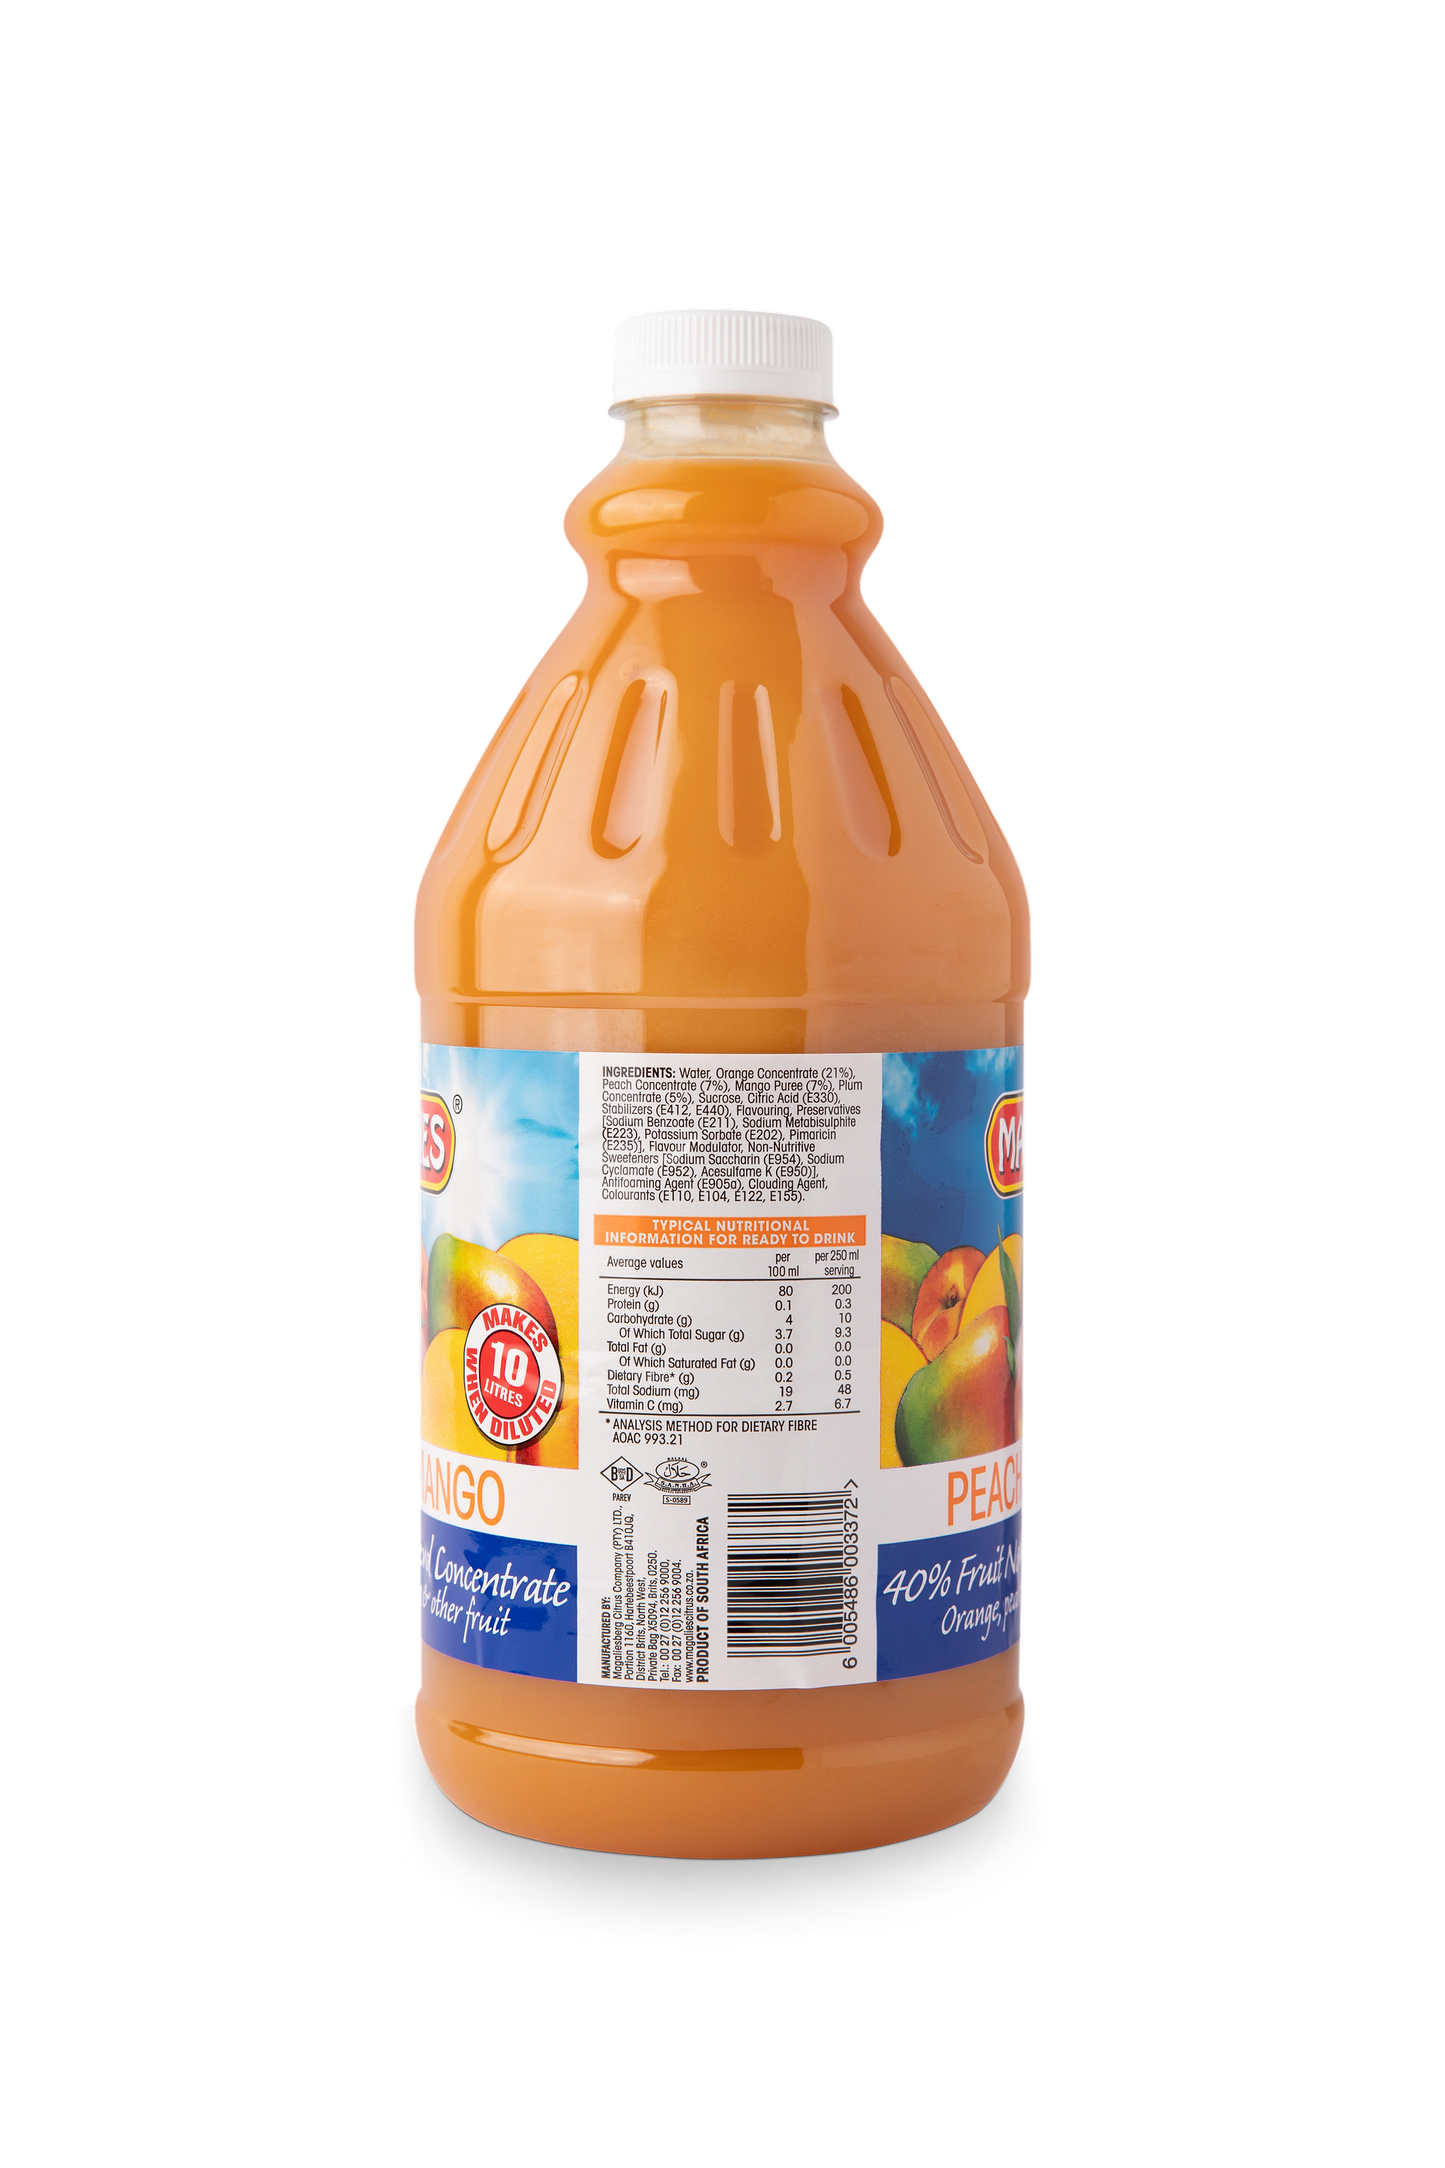 Magalies 2 litre Peach & Mango 40% 1+4 fruit nectar concentrate